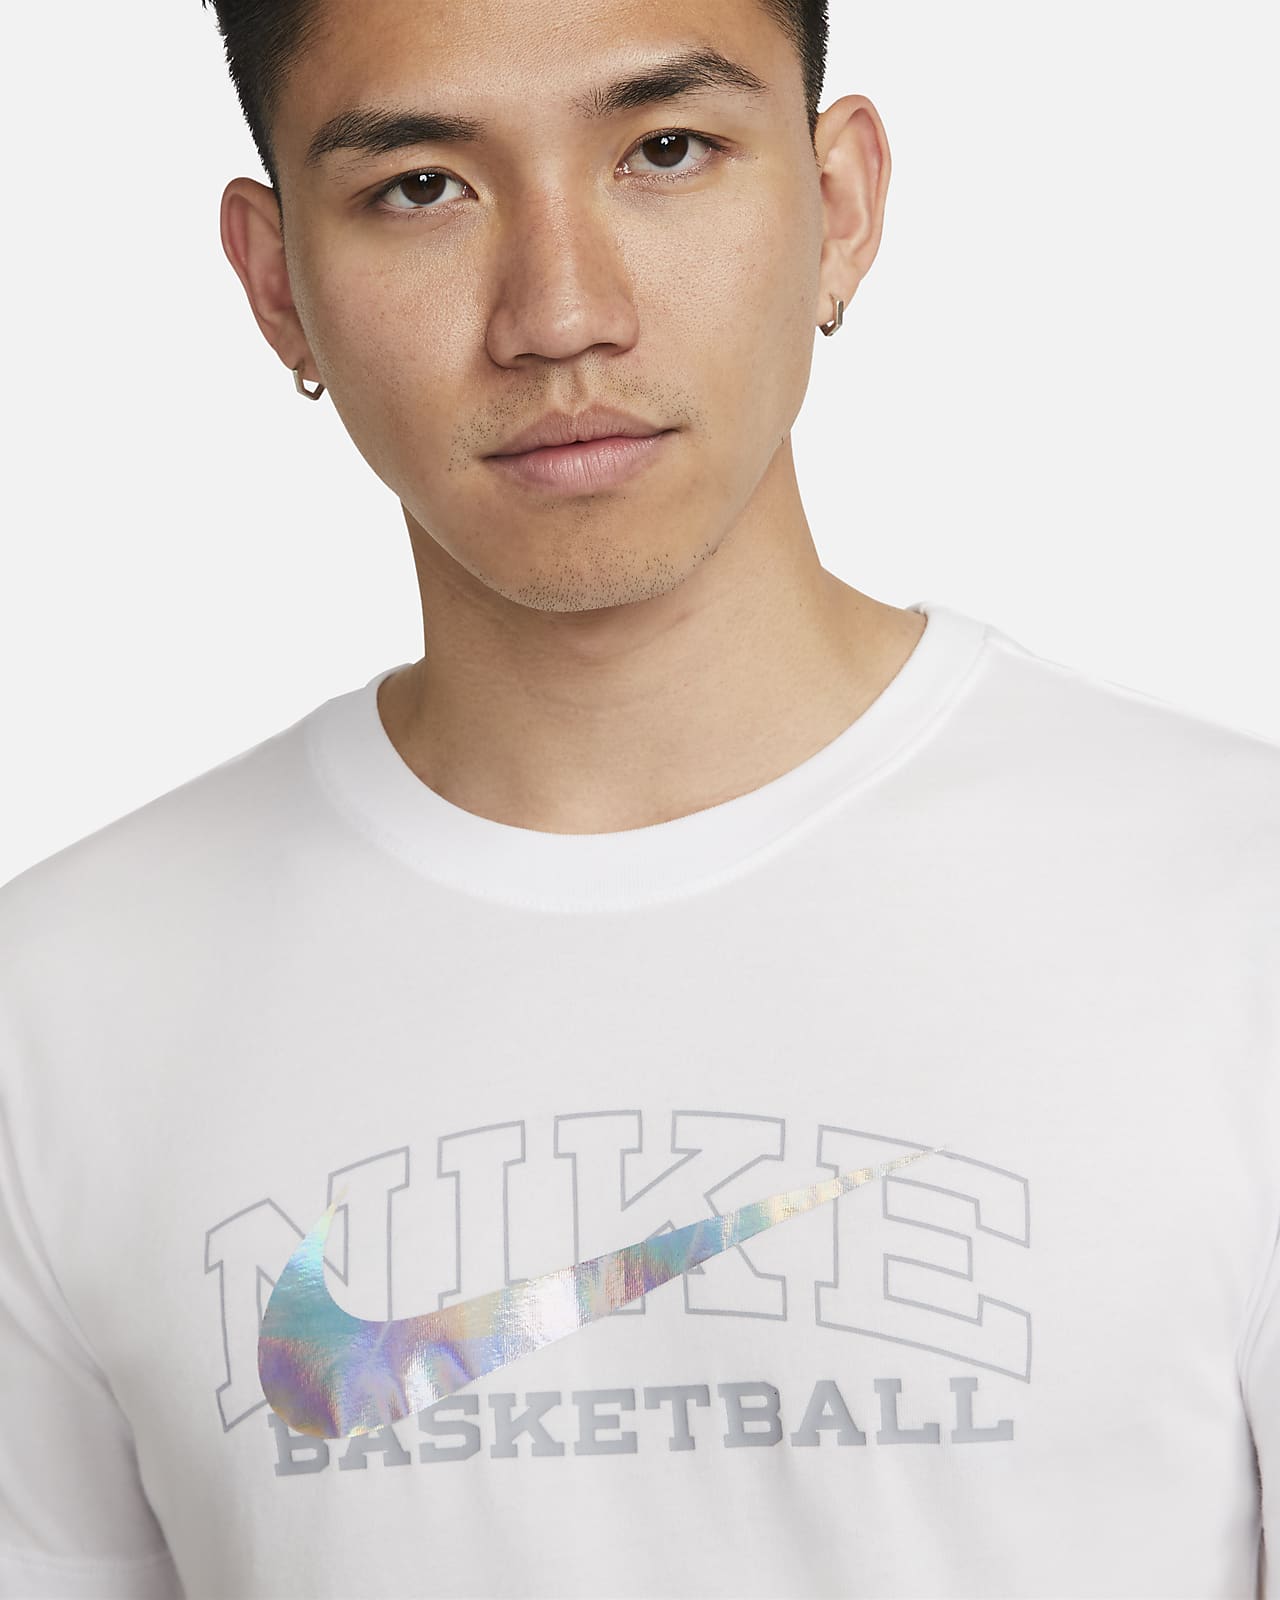 Nike Dri-FIT Men's Basketball T-shirt. Nike ID